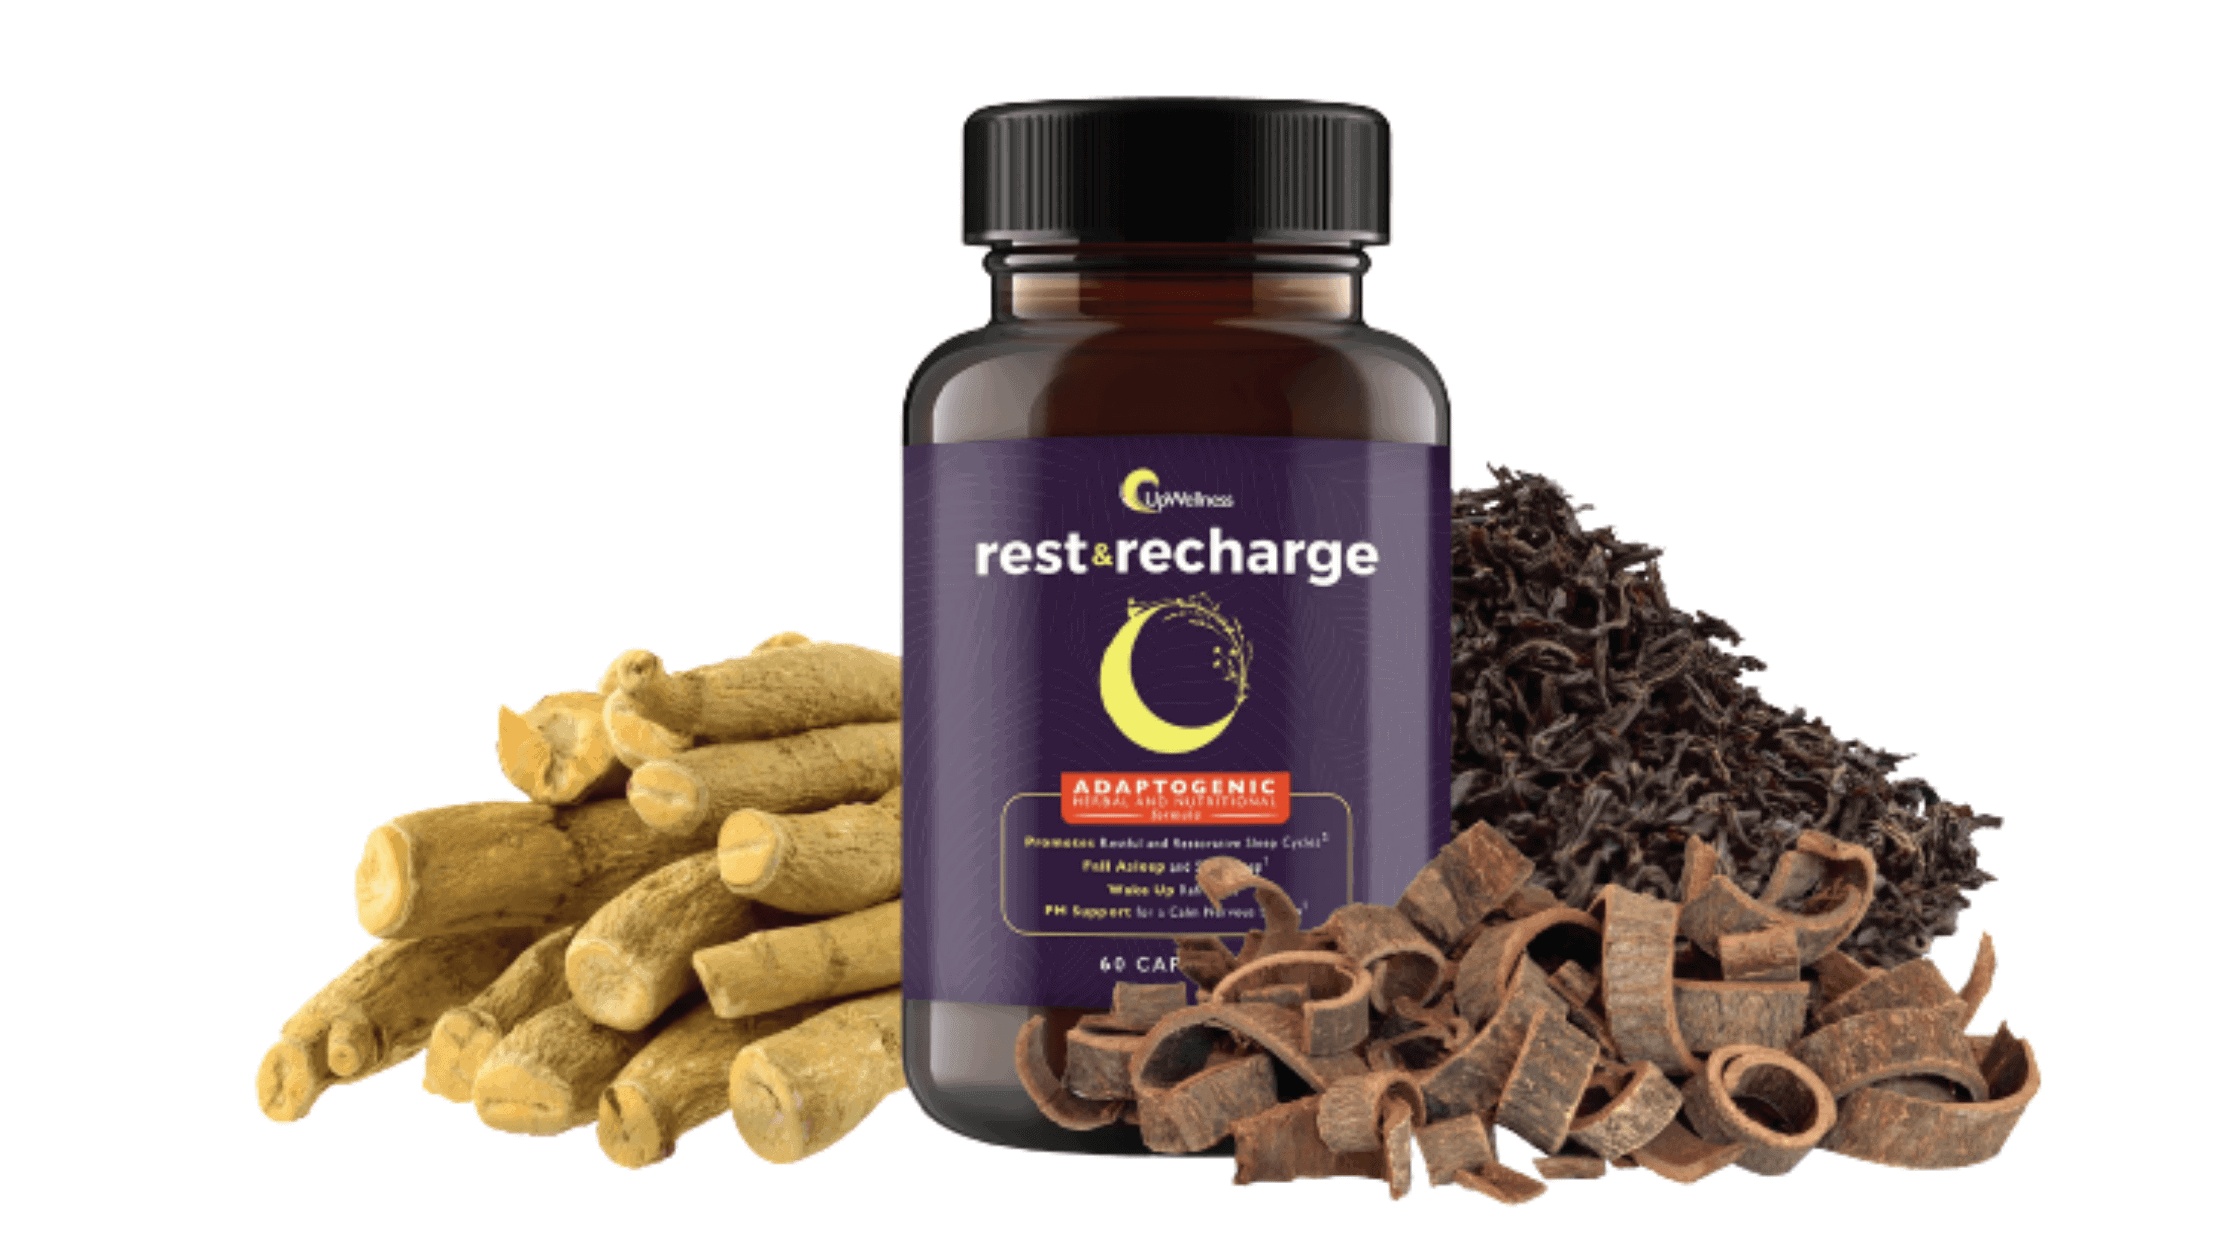 Rest & Recharge sleep support supplement